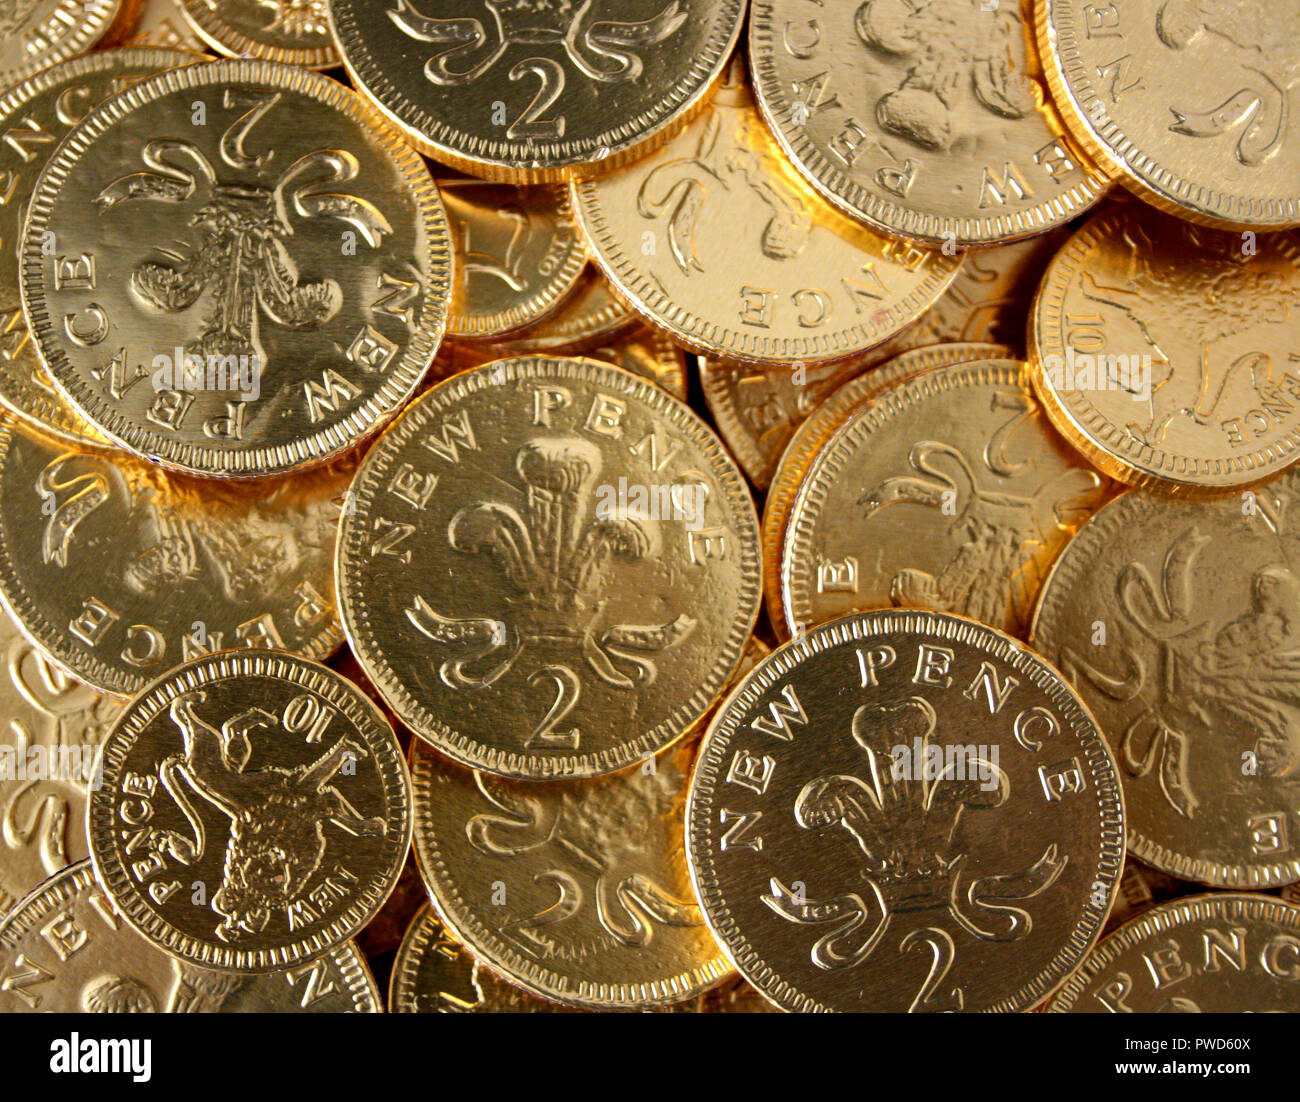 710 fotos e imágenes de Moneda De Chocolate - Getty Images